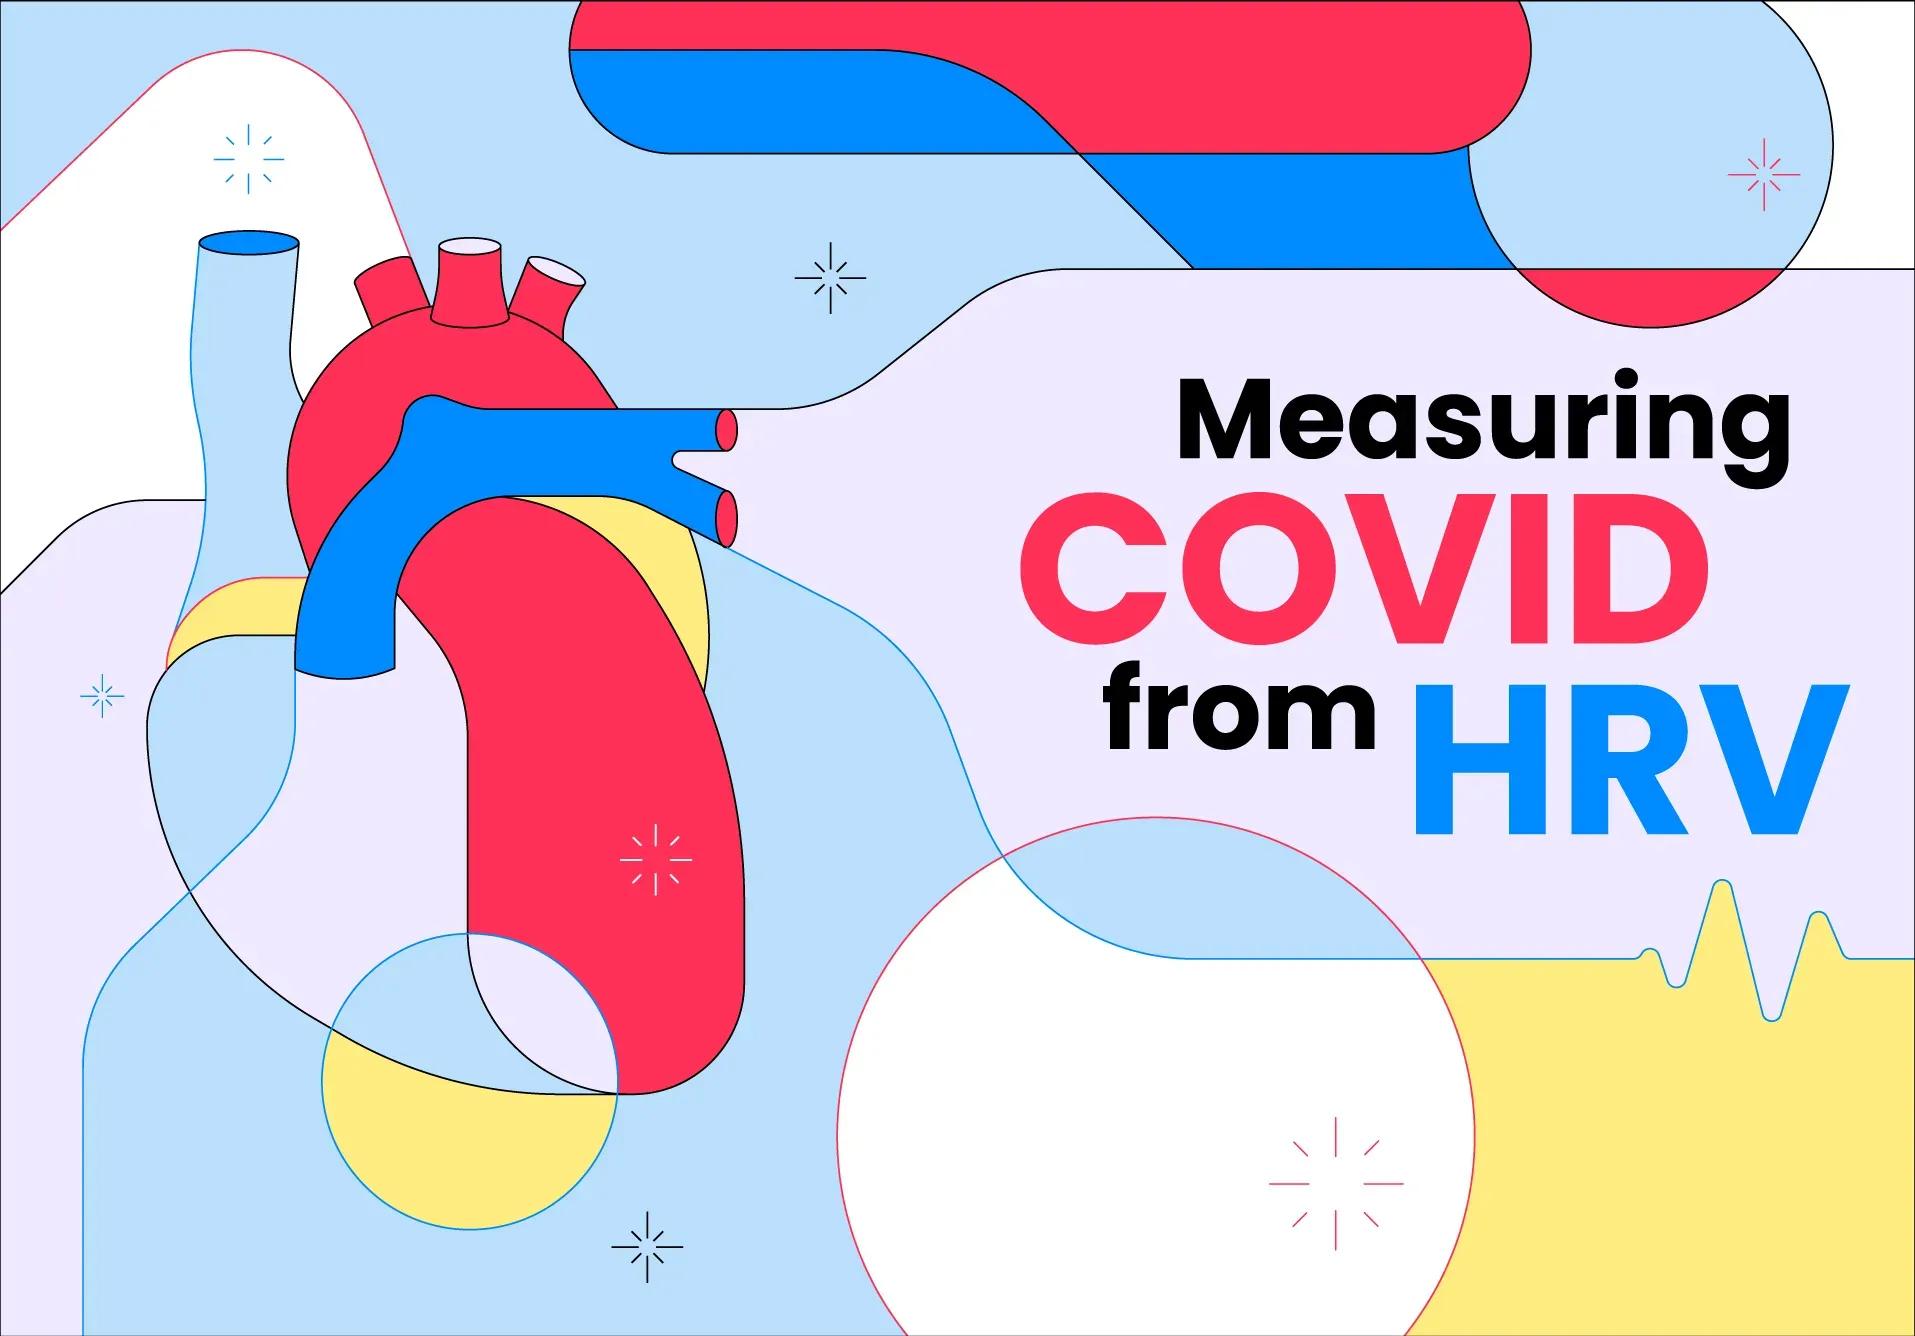 Identifying COVID from HRV